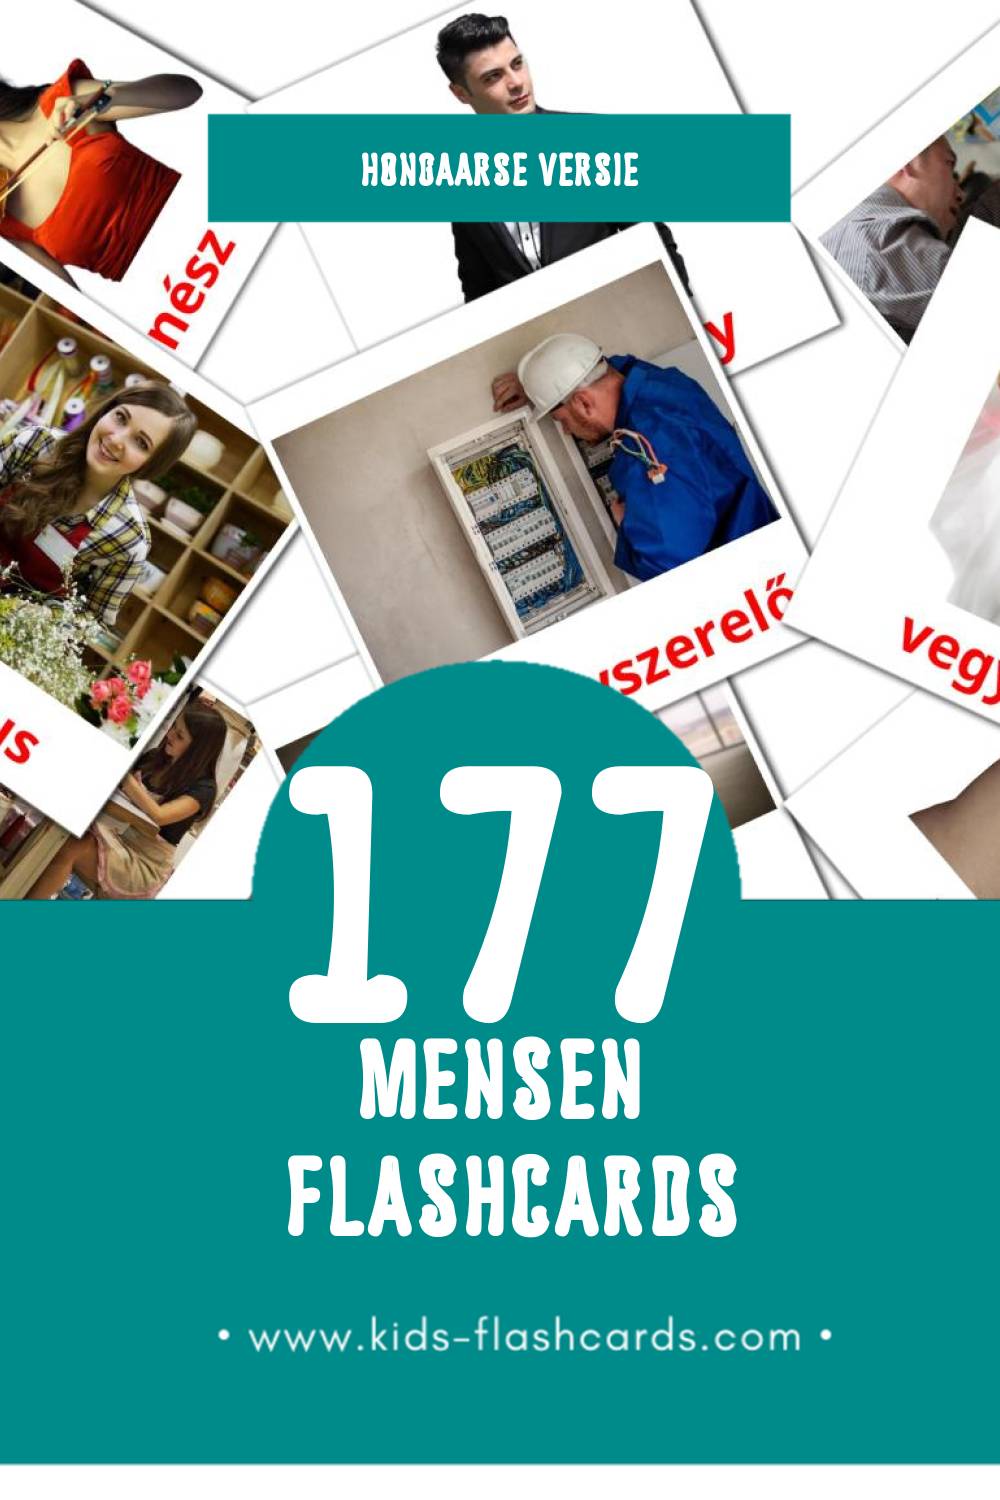 Visuele Emberek Flashcards voor Kleuters (177 kaarten in het Hongaars)